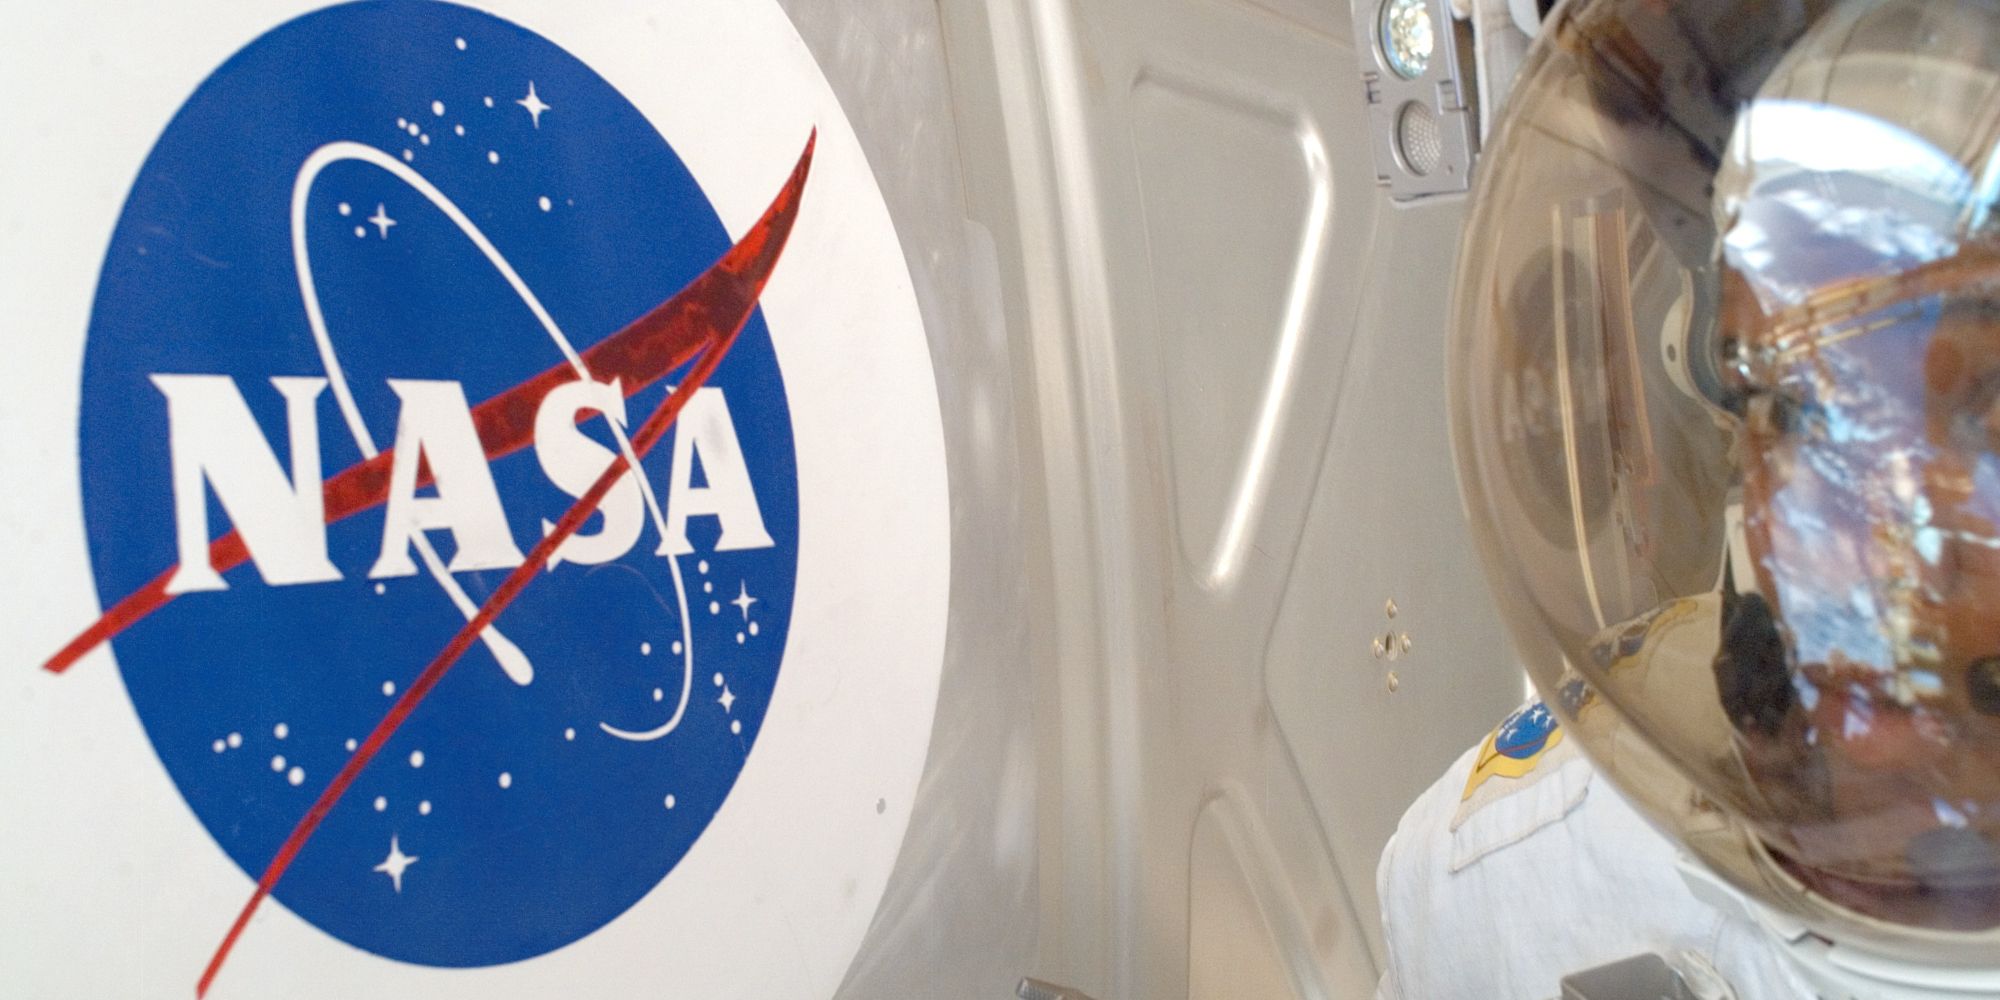 Photo of an astronaut looking at the NASA logo